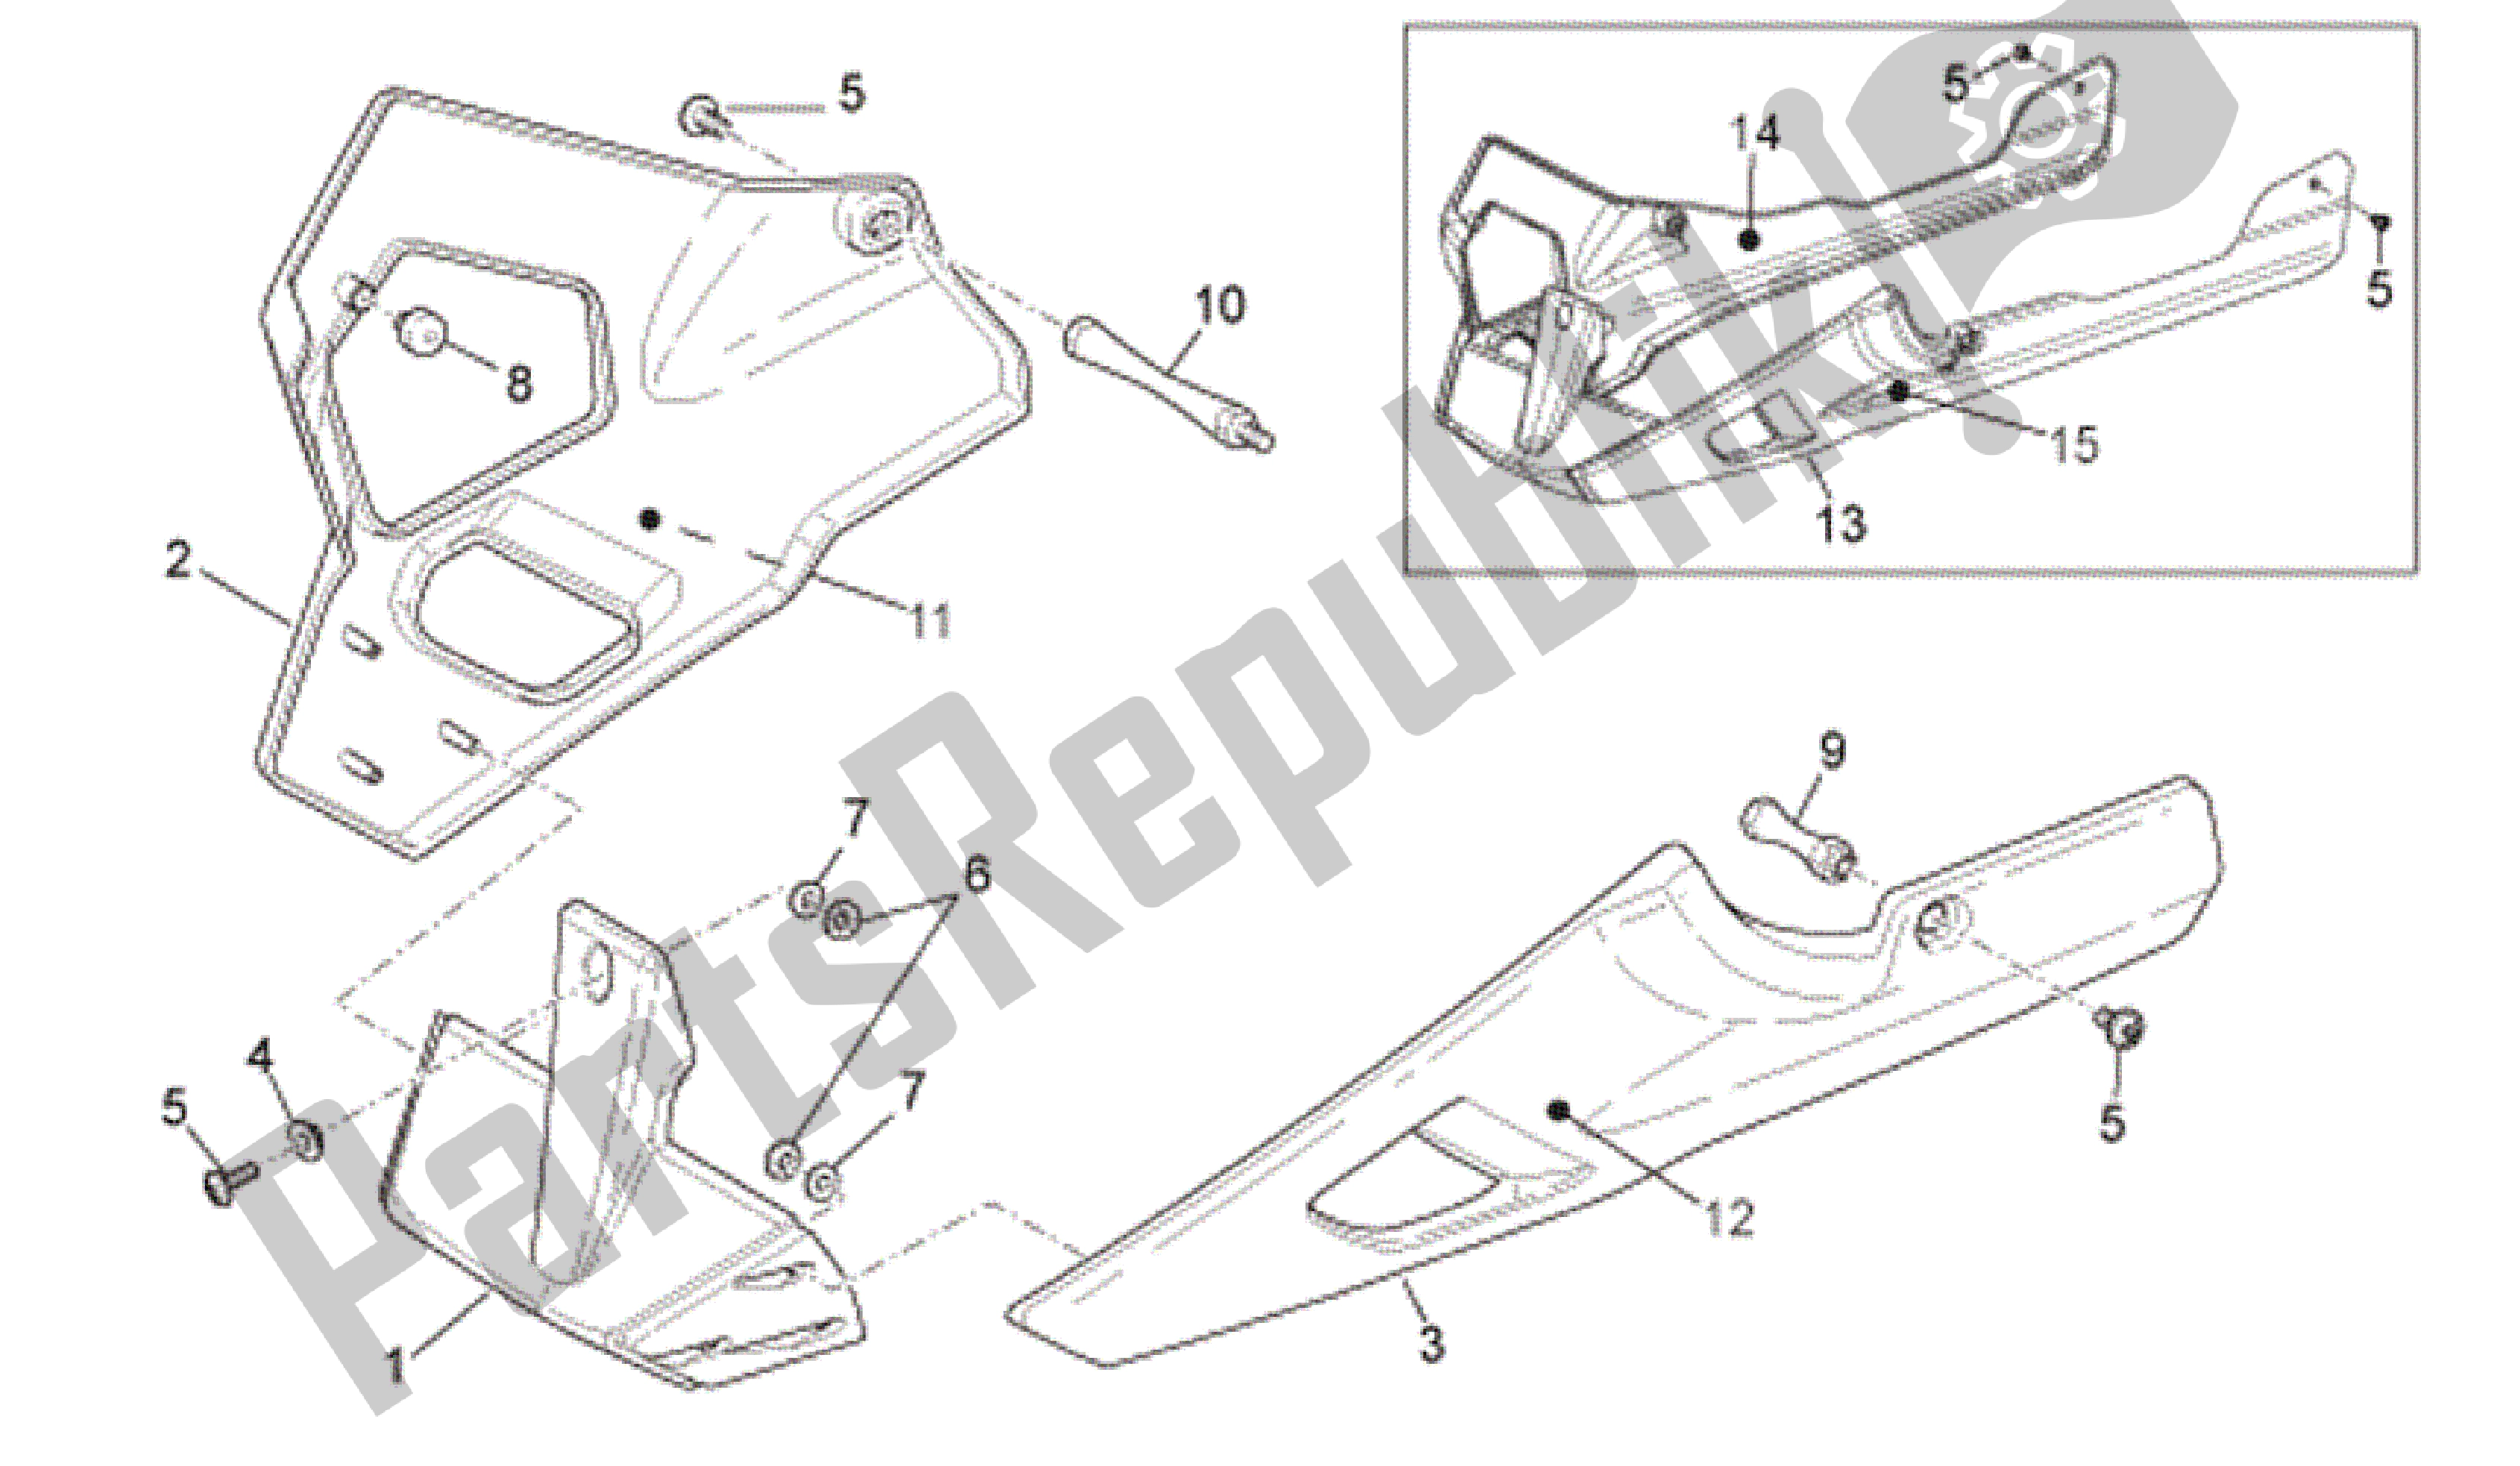 All parts for the Front Body - Fairings Ii of the Aprilia RSV Tuono R 3985 1000 2006 - 2009